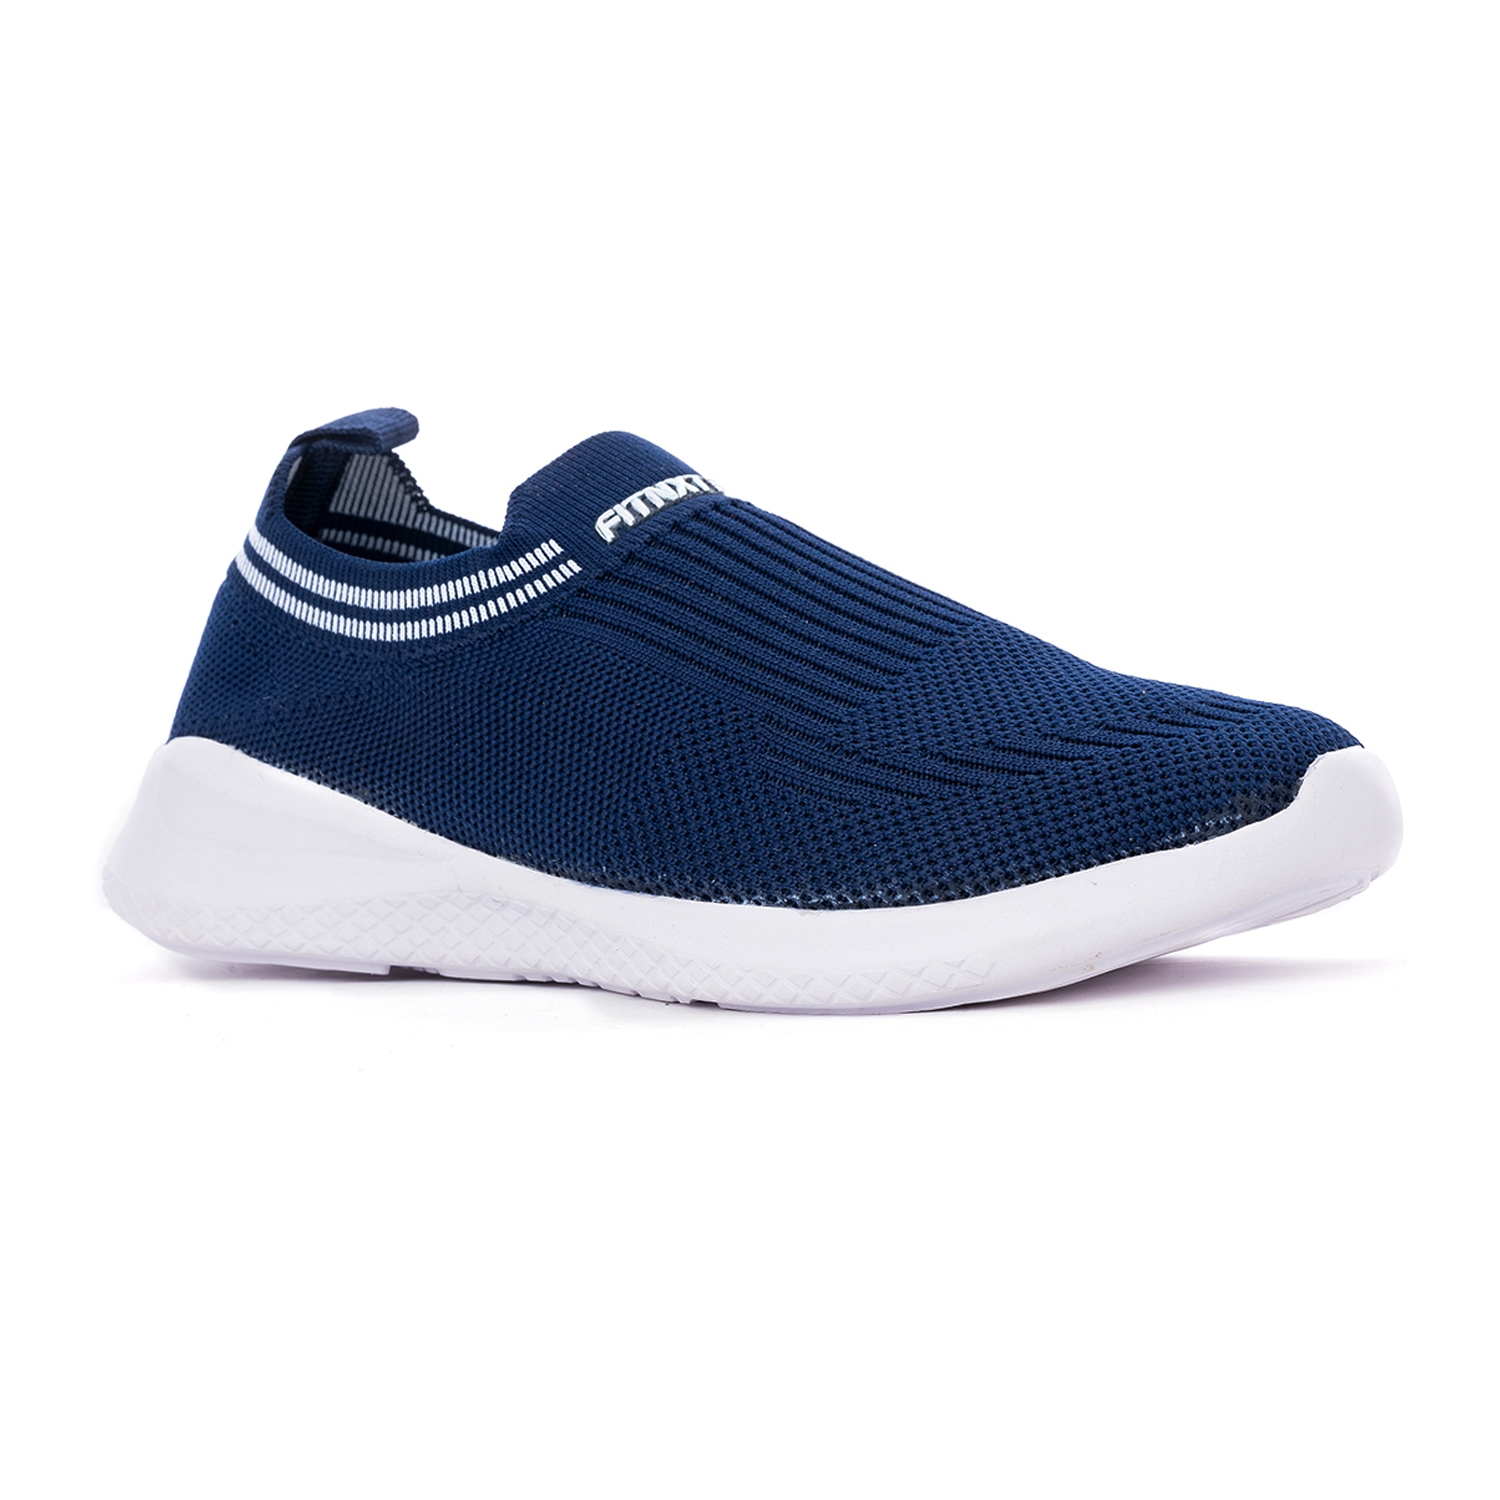 Khadim | Fitnxt Navy Walking Sports Shoes for Women